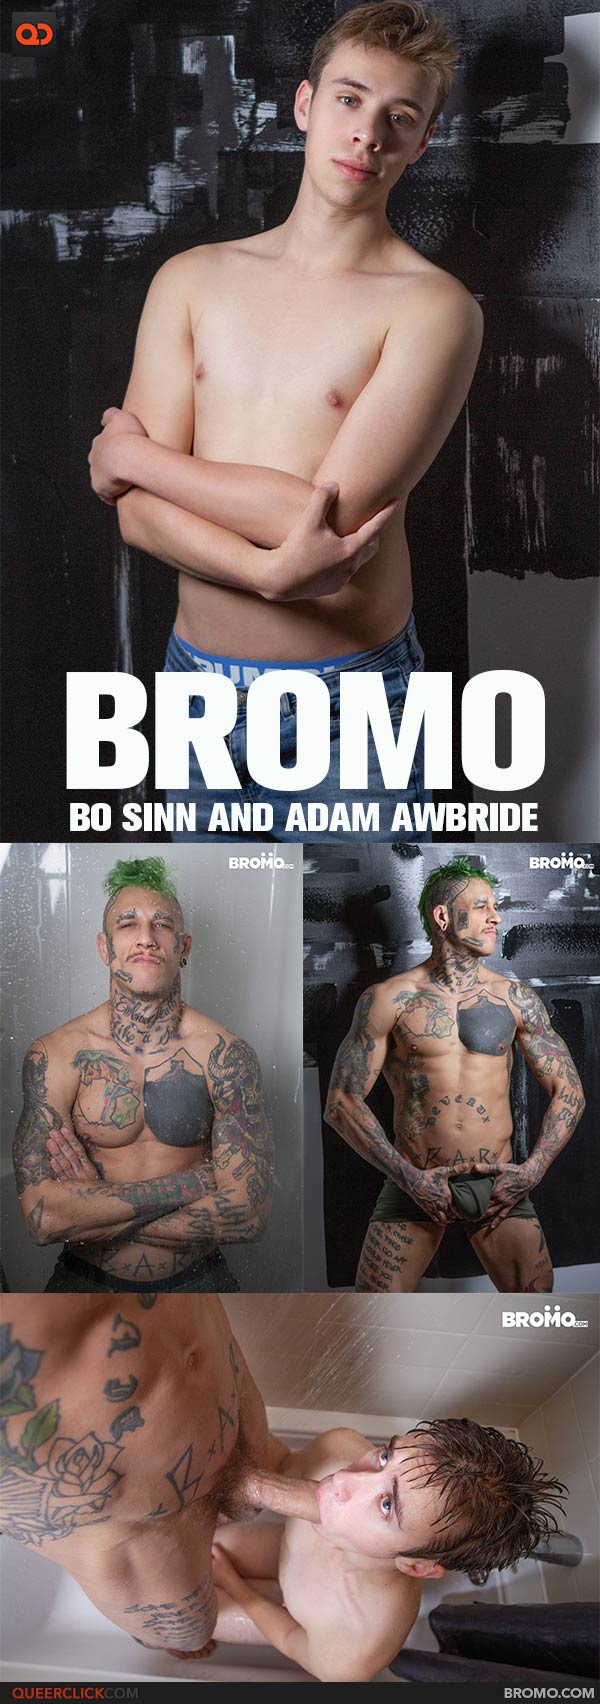 Bromo: Bo Sinn and Adam Awbride